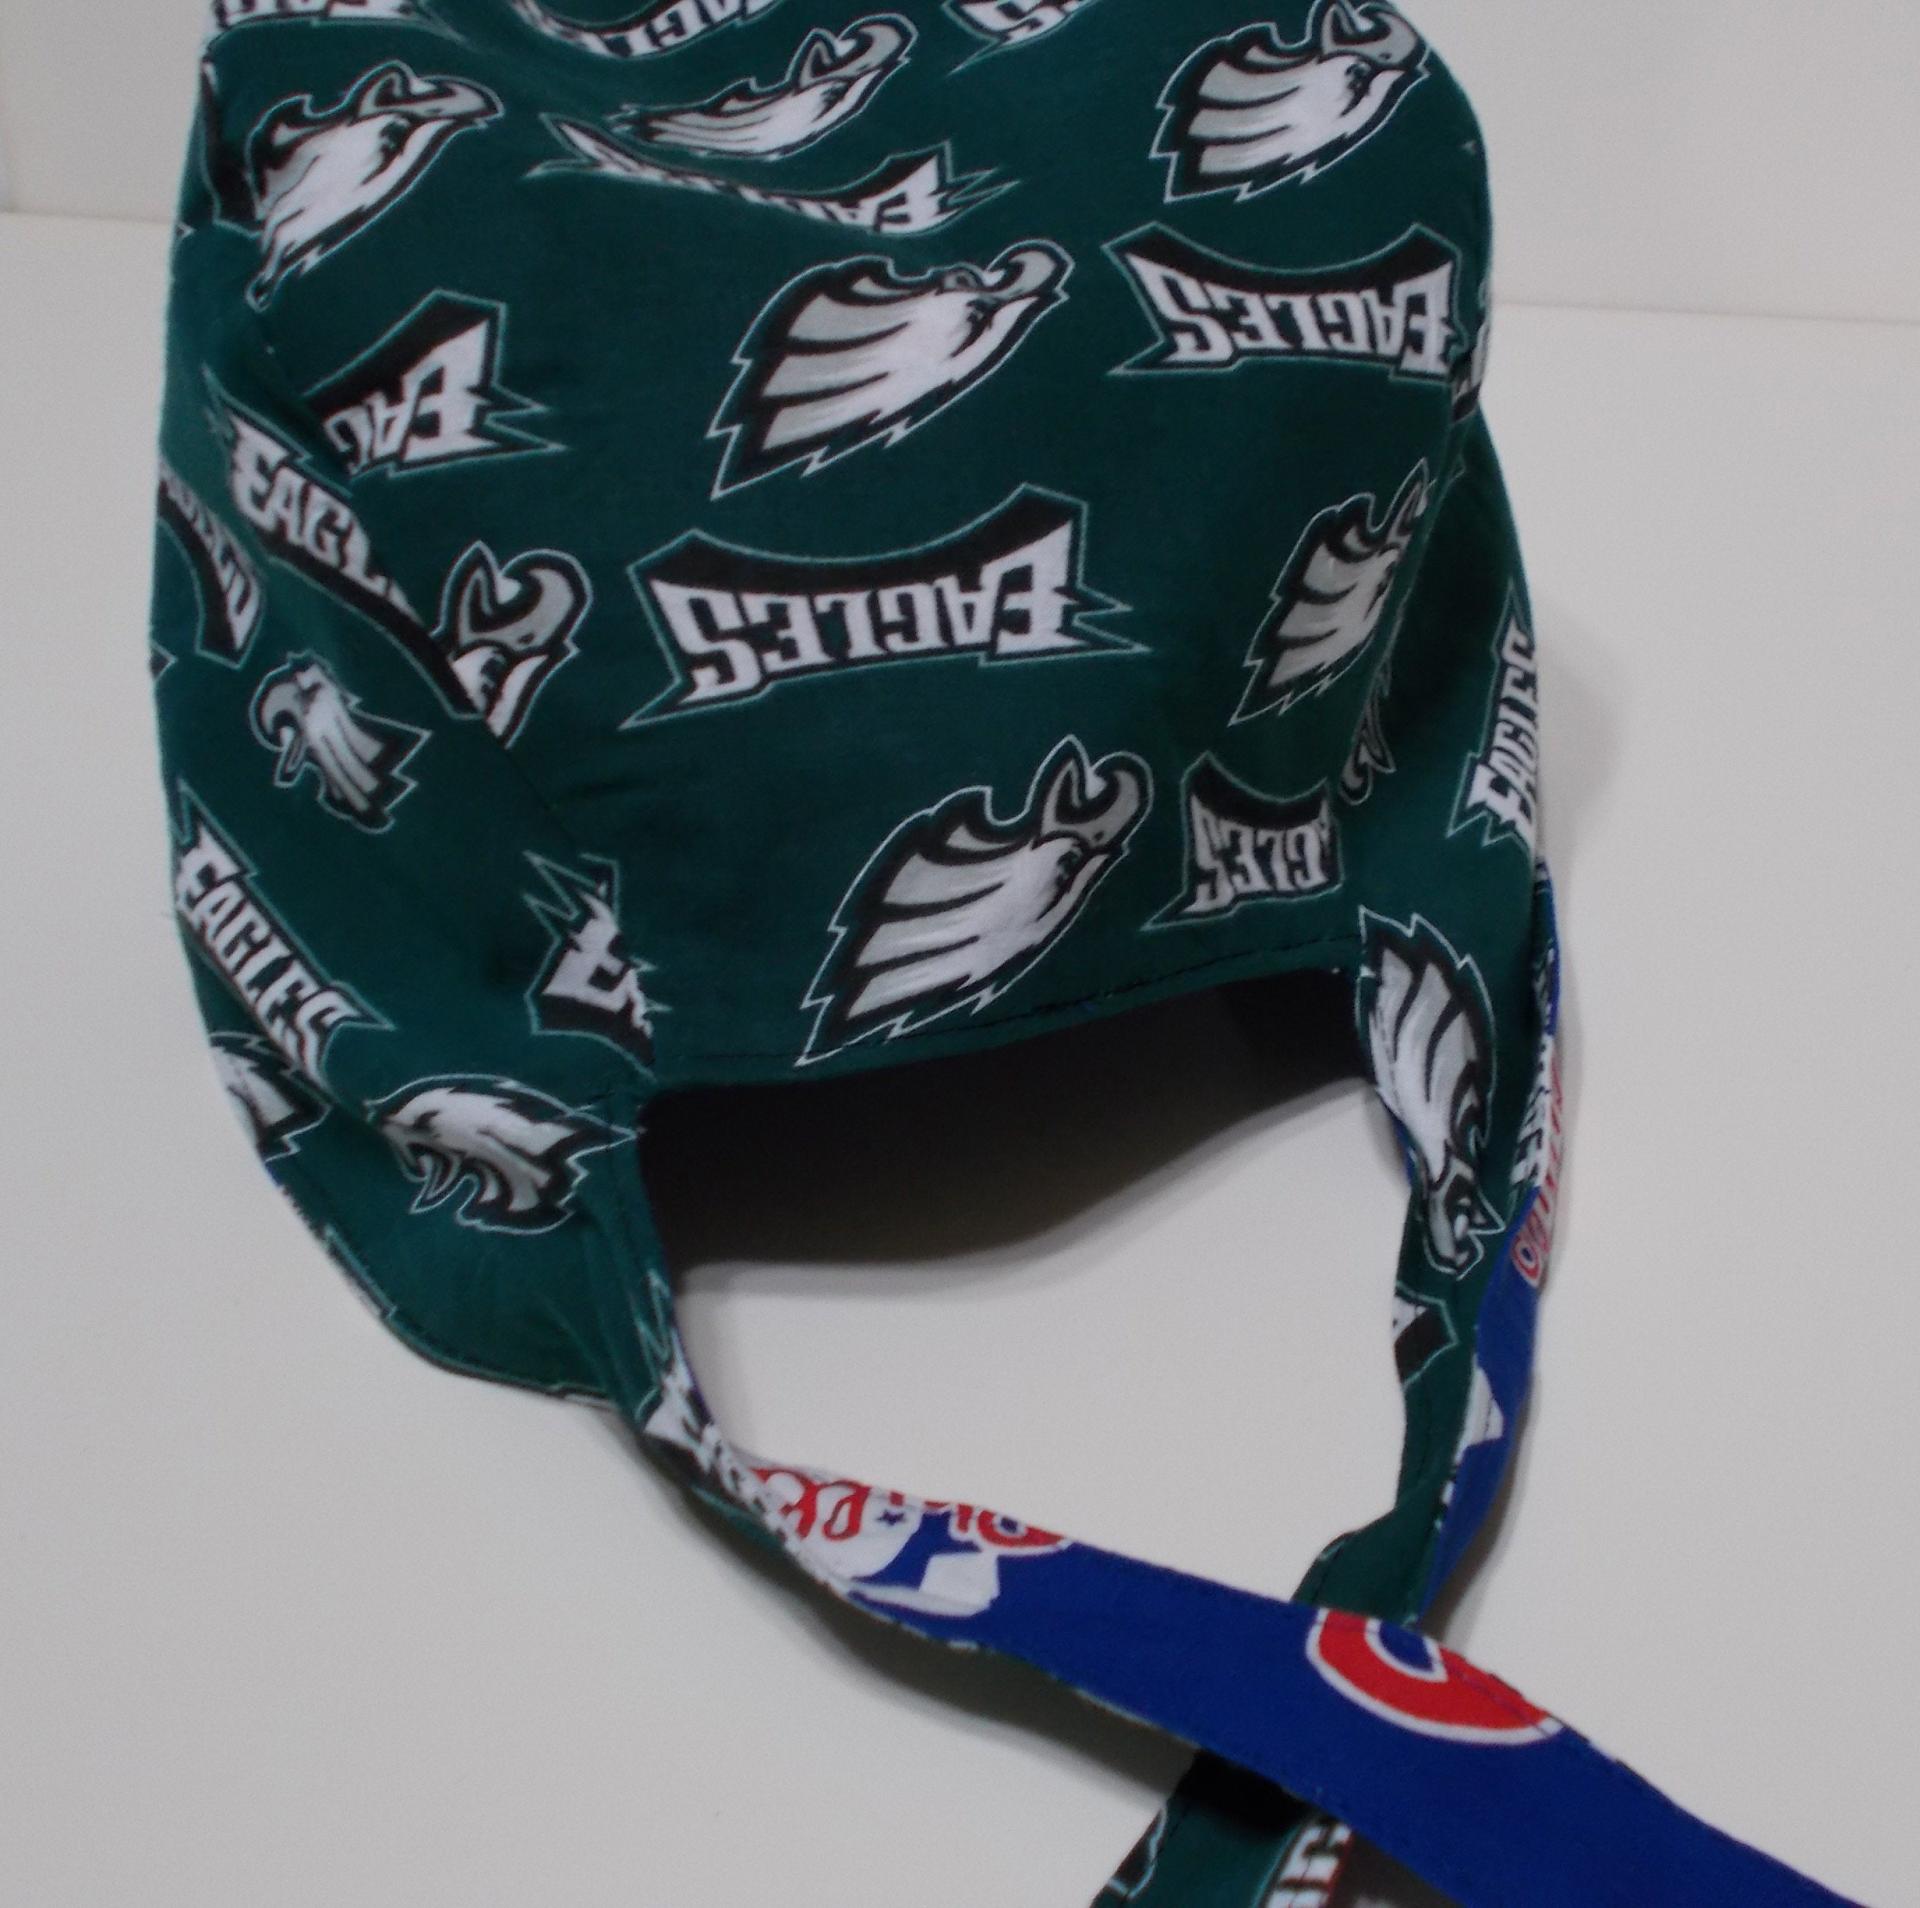 Reversible Unisex Phillies / Eagles scrub cap, tie back